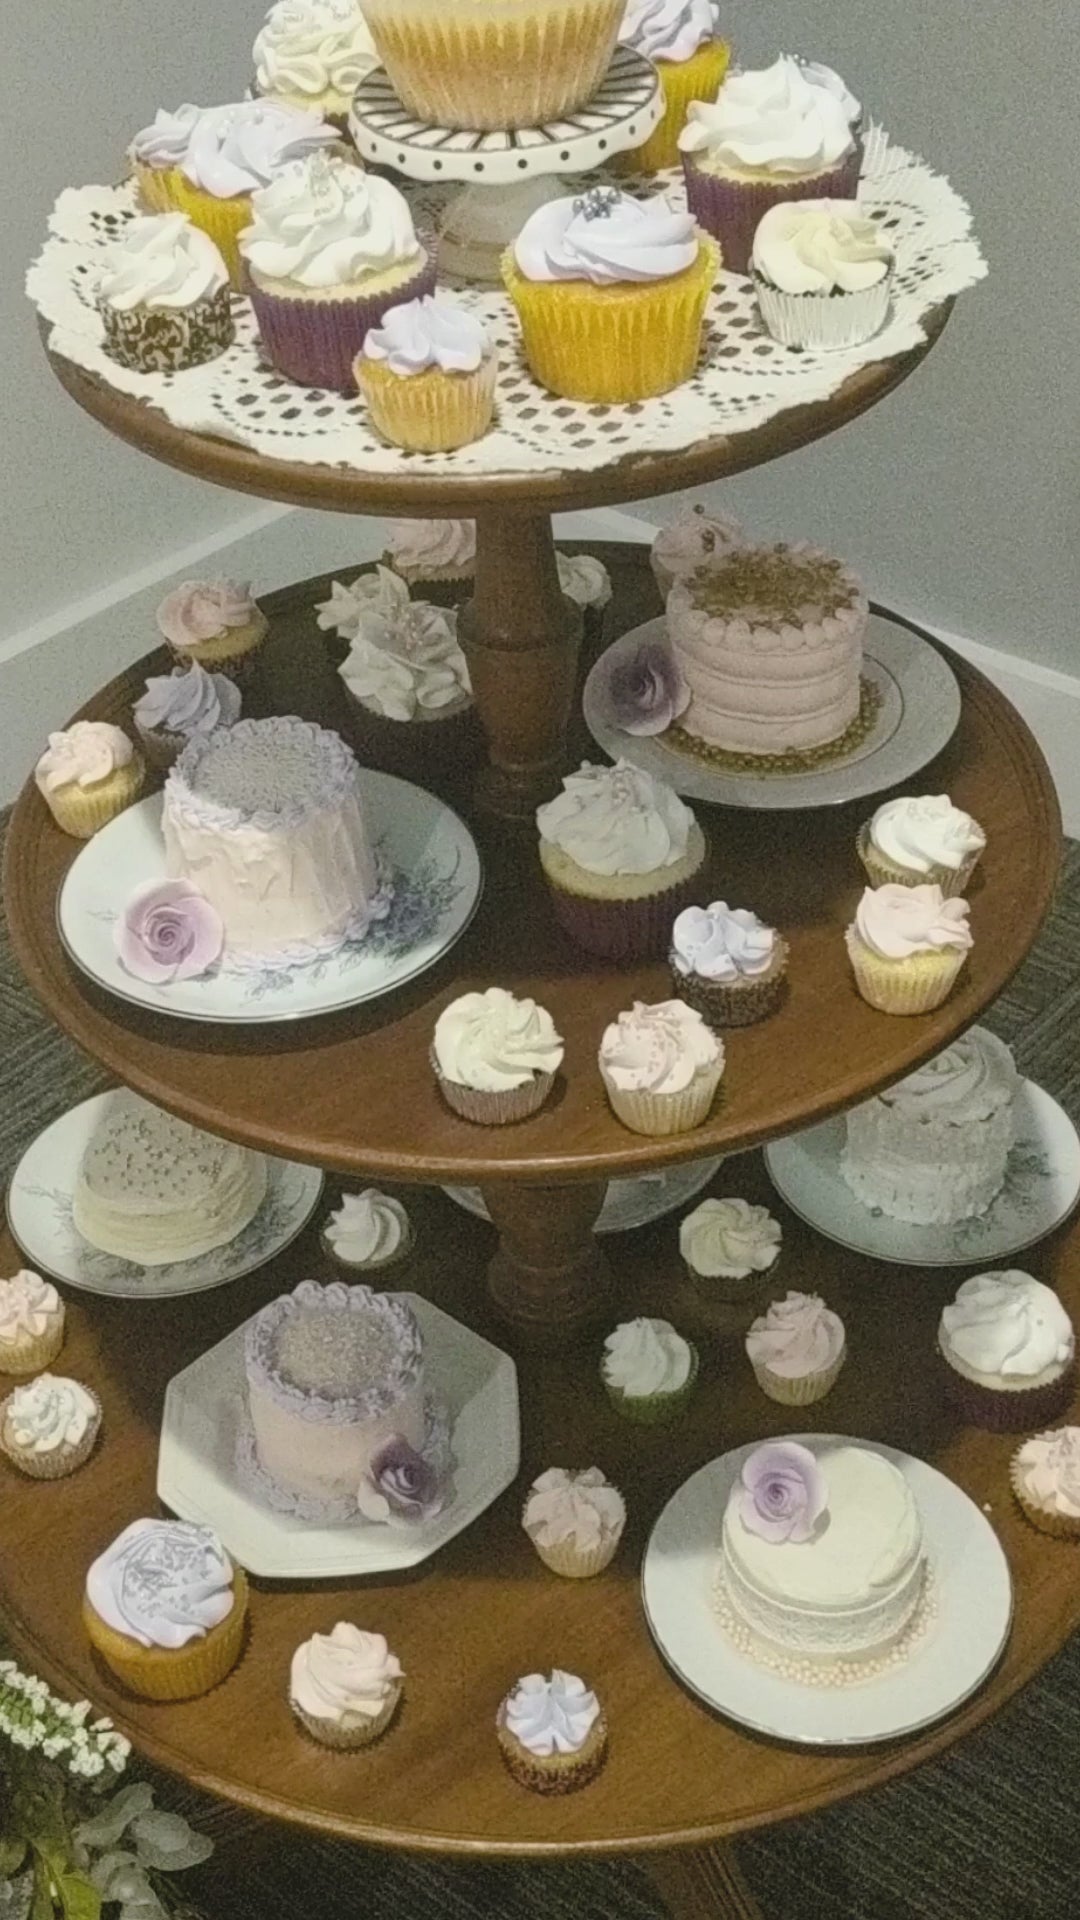 Custom Cake baker decorator in panama city beach florida for wedding cakes birthday cakes cupcake baker